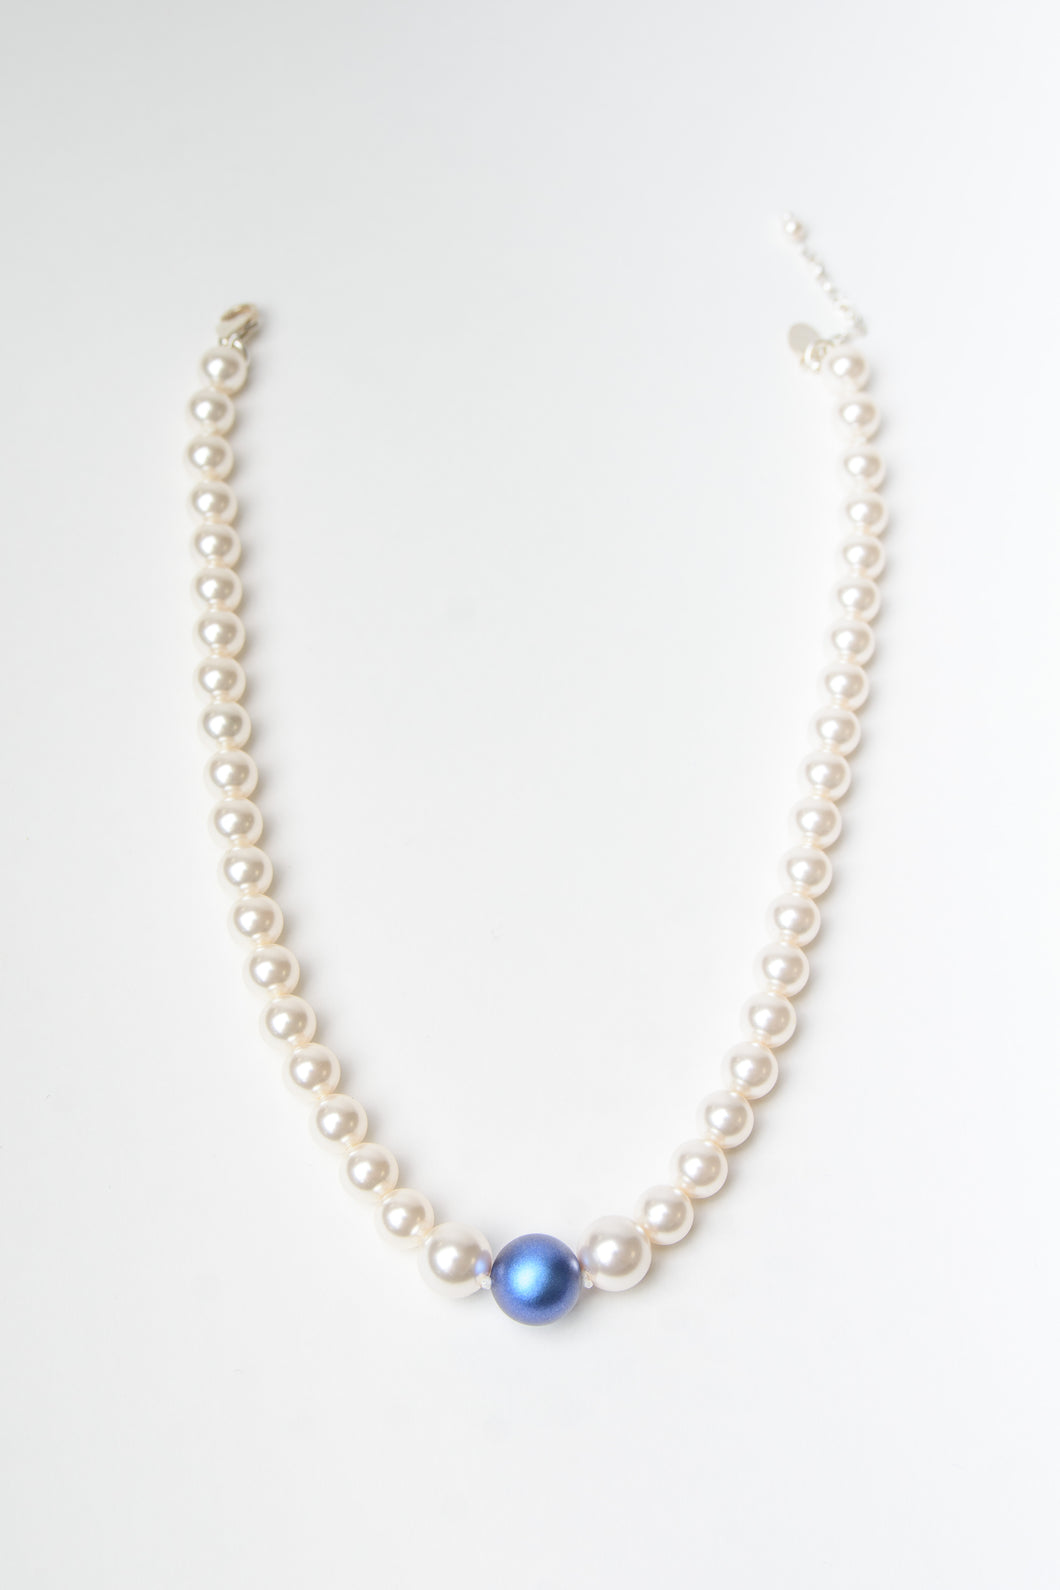 Swarovski iridescent dark blue pearl necklace